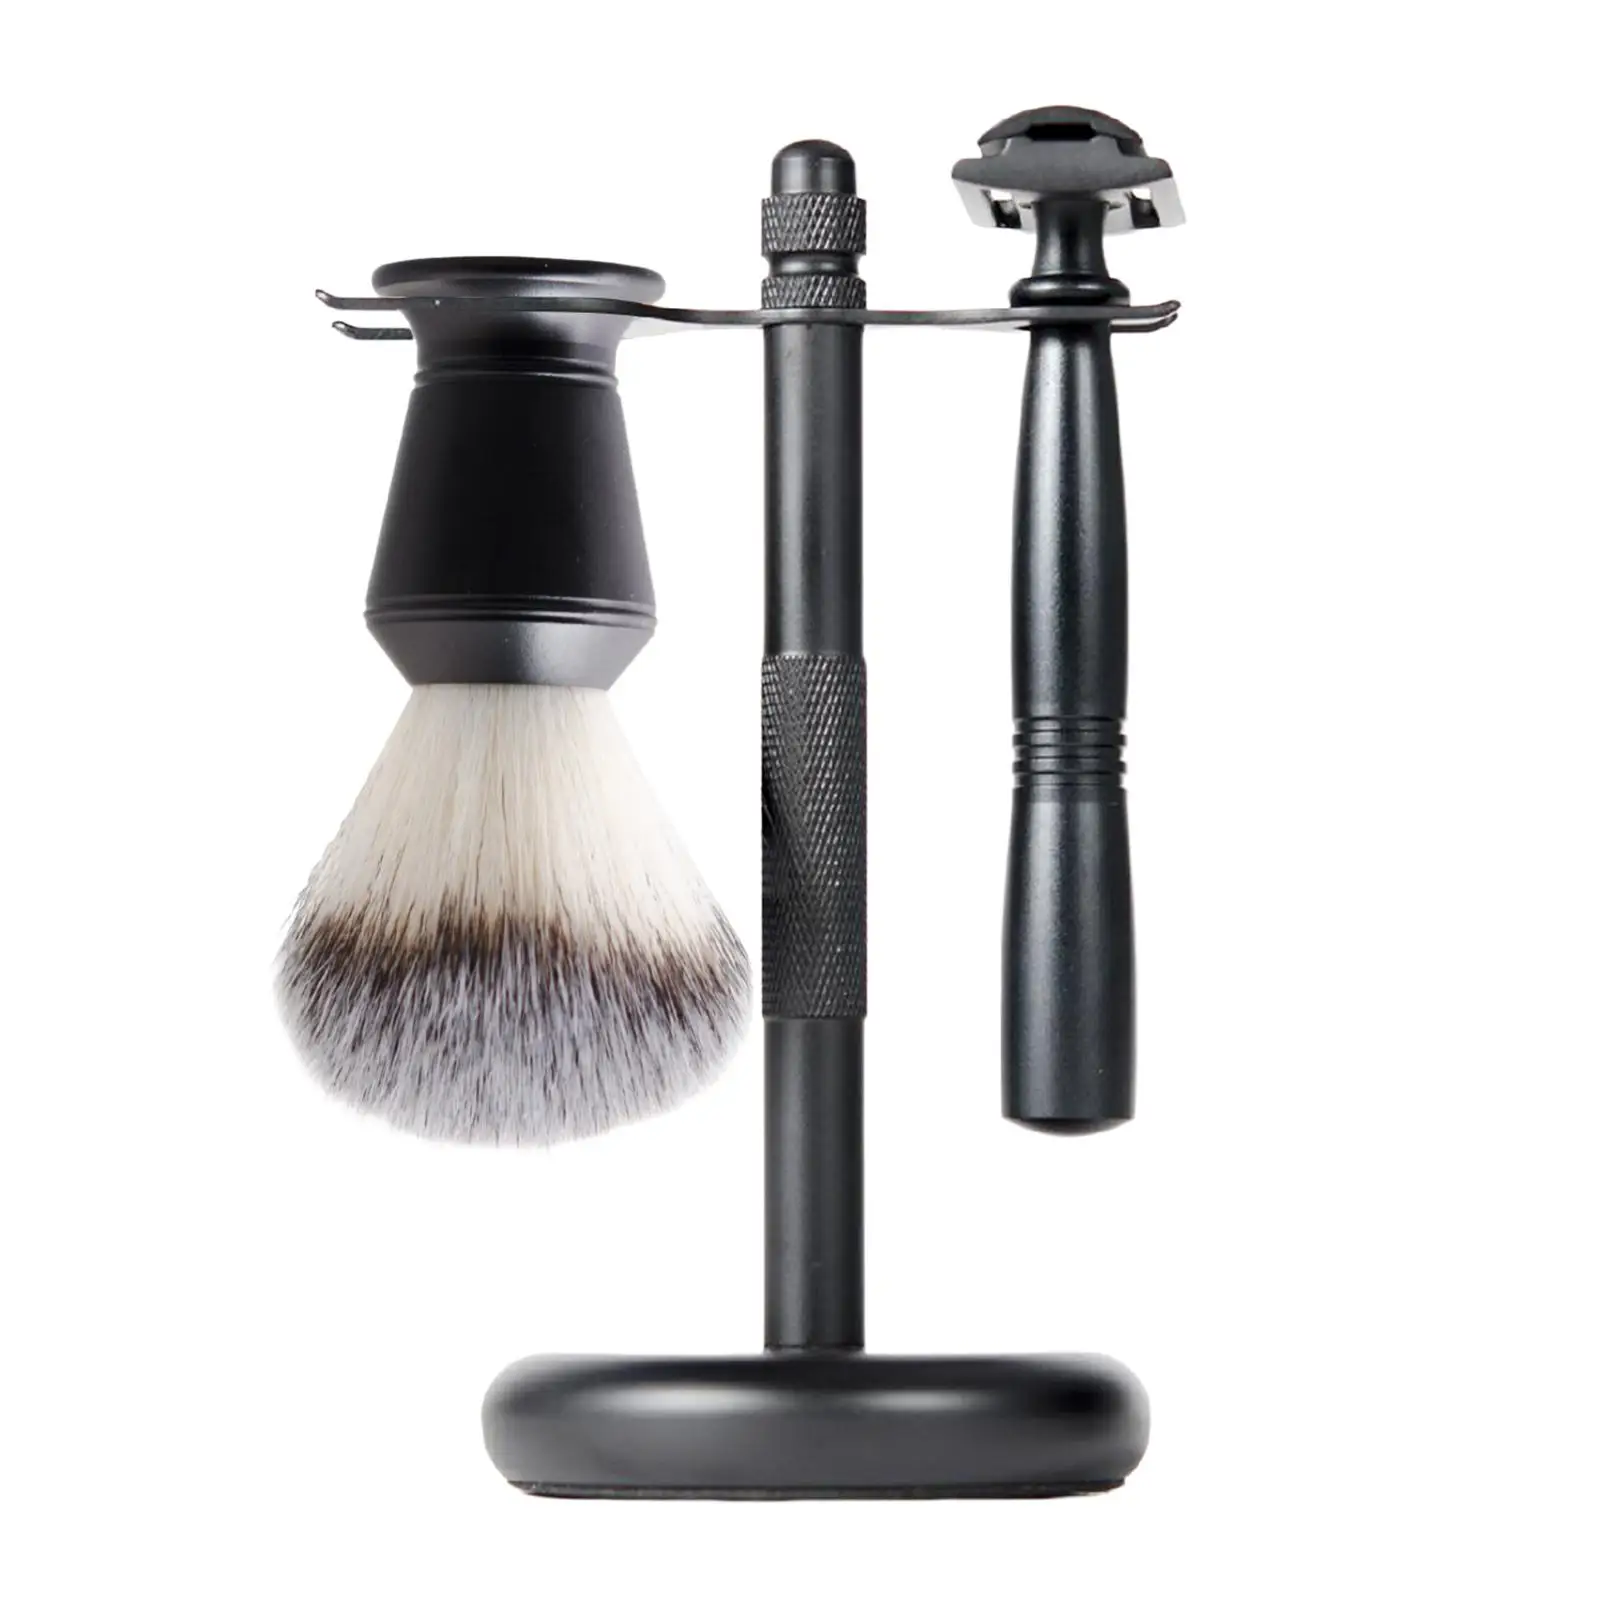 3x Mens Shaving Set Black Razor Shaving Kit Includes Edge Razor, Holder, Shaving Brush Luxury for Men Dad Boyfriend Husband